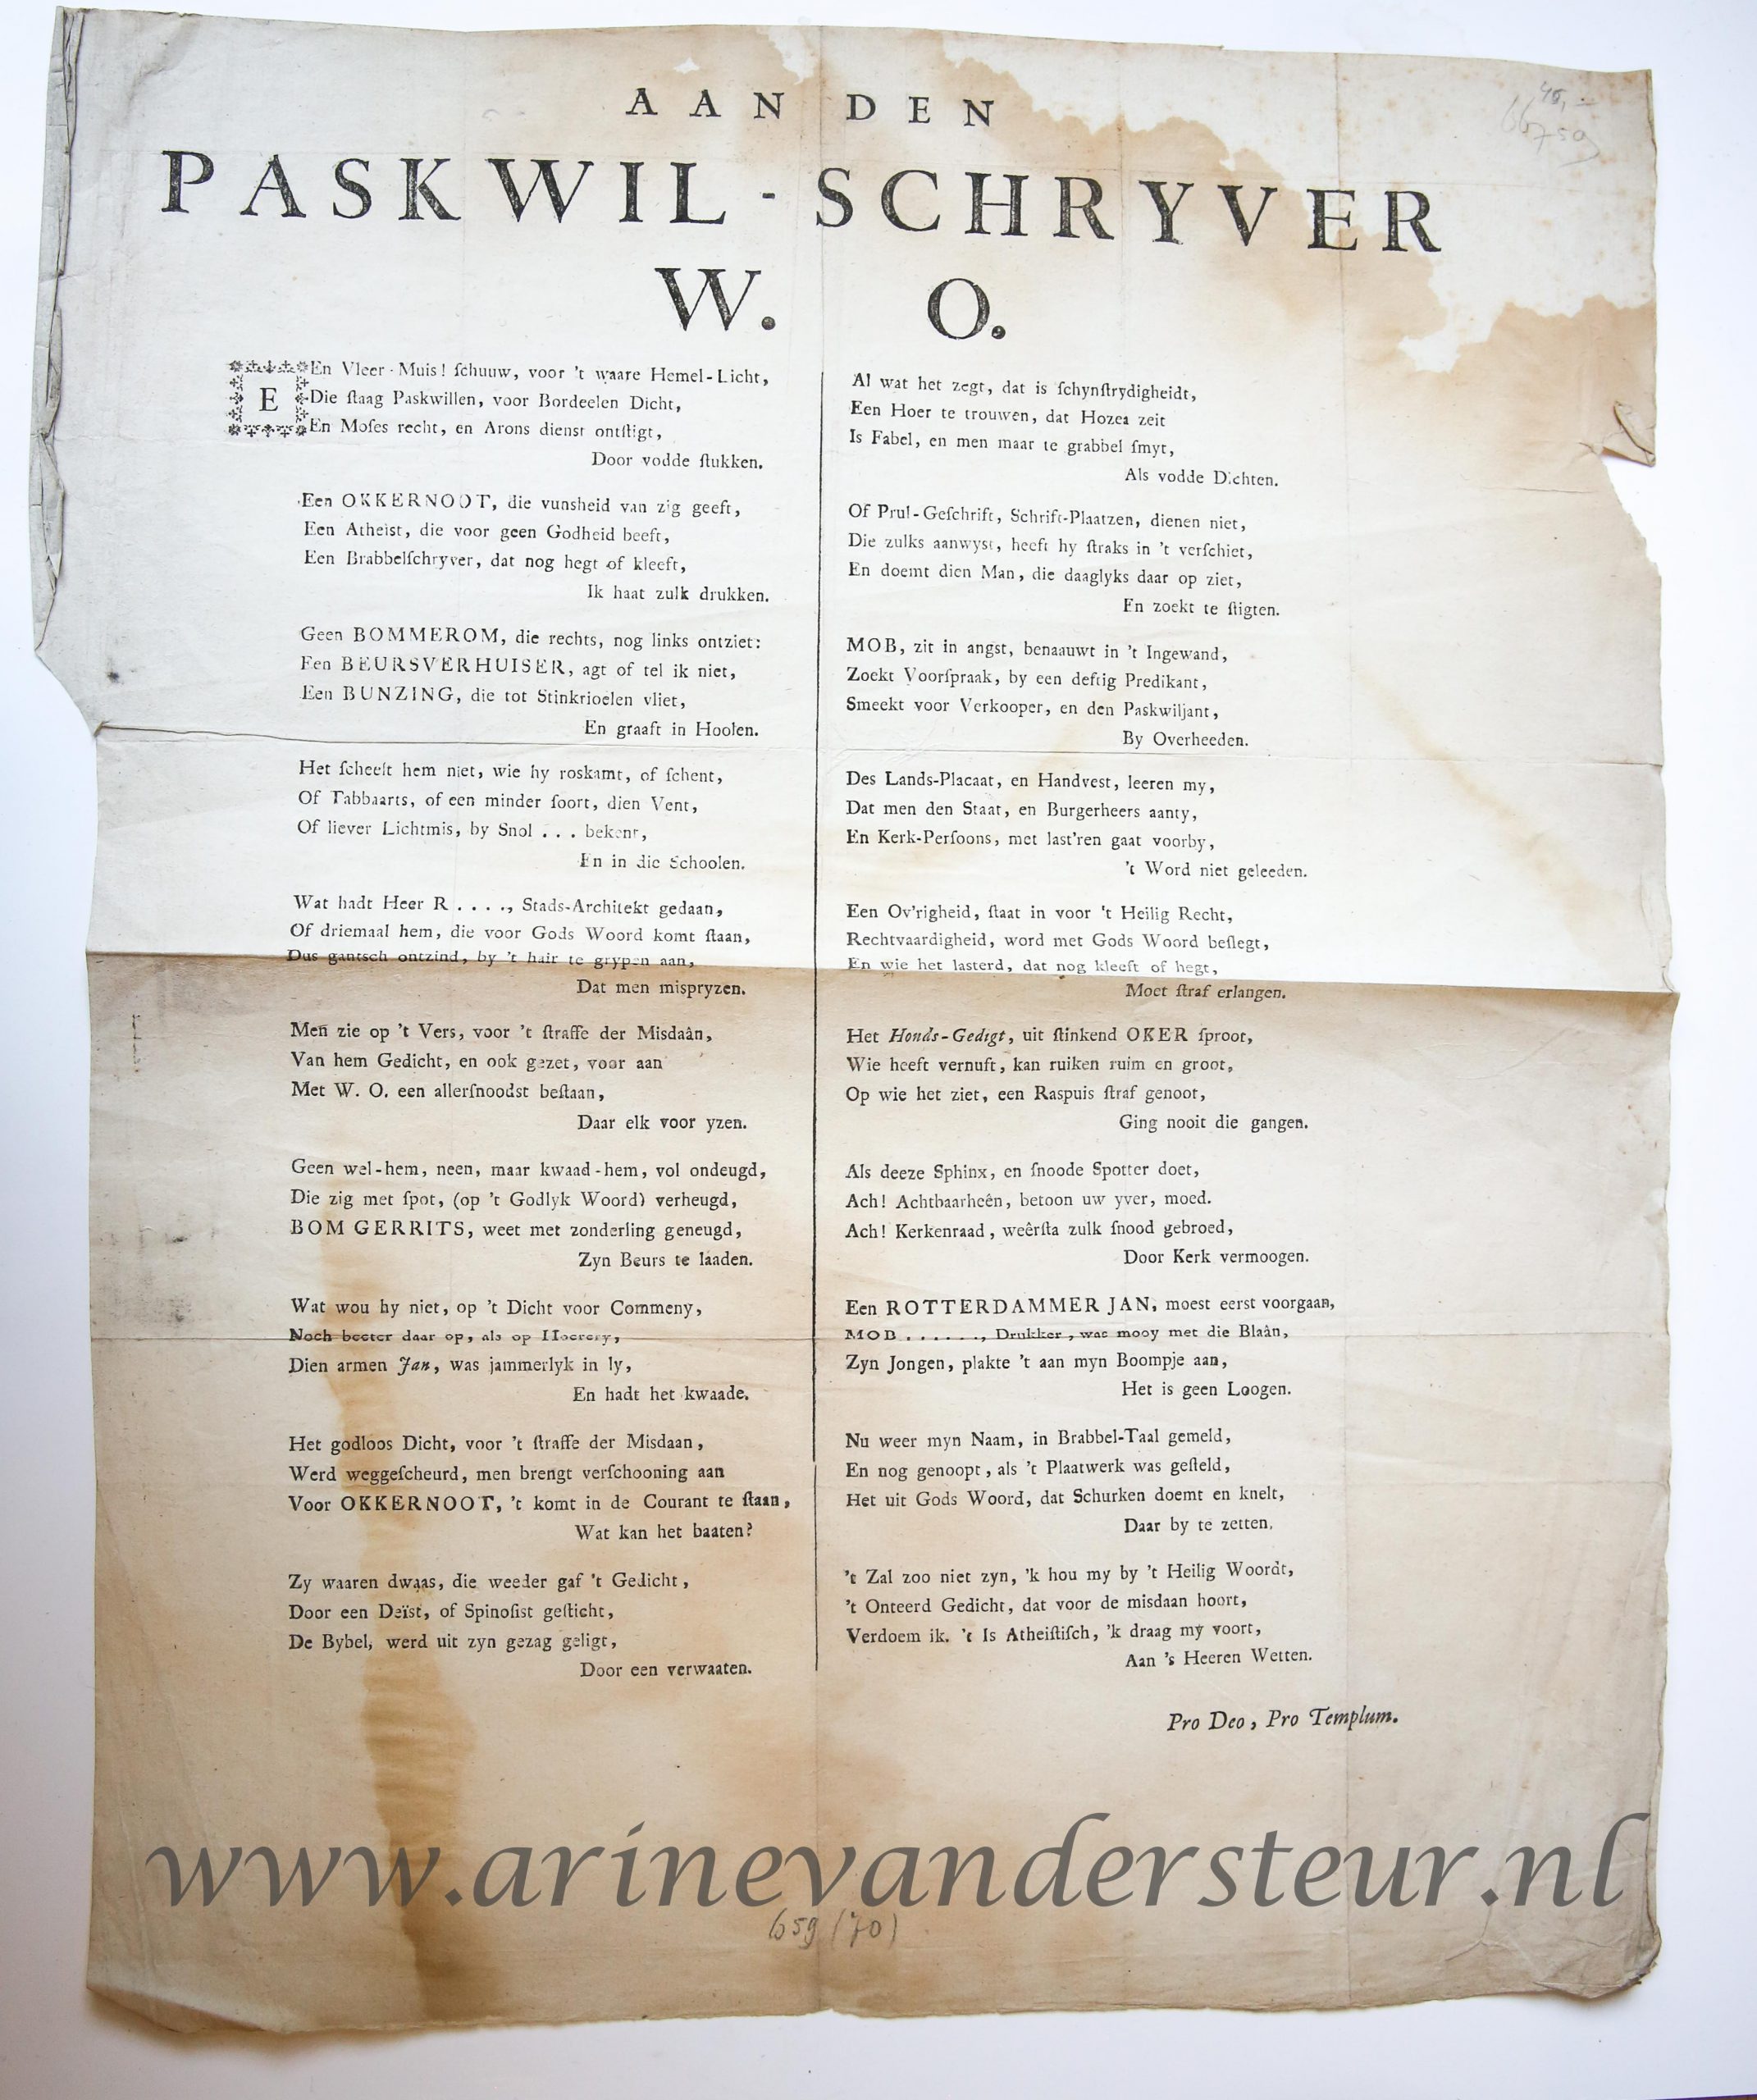 Pamphlet. Aan den Paskwil - Schryver W.O., 1 p.